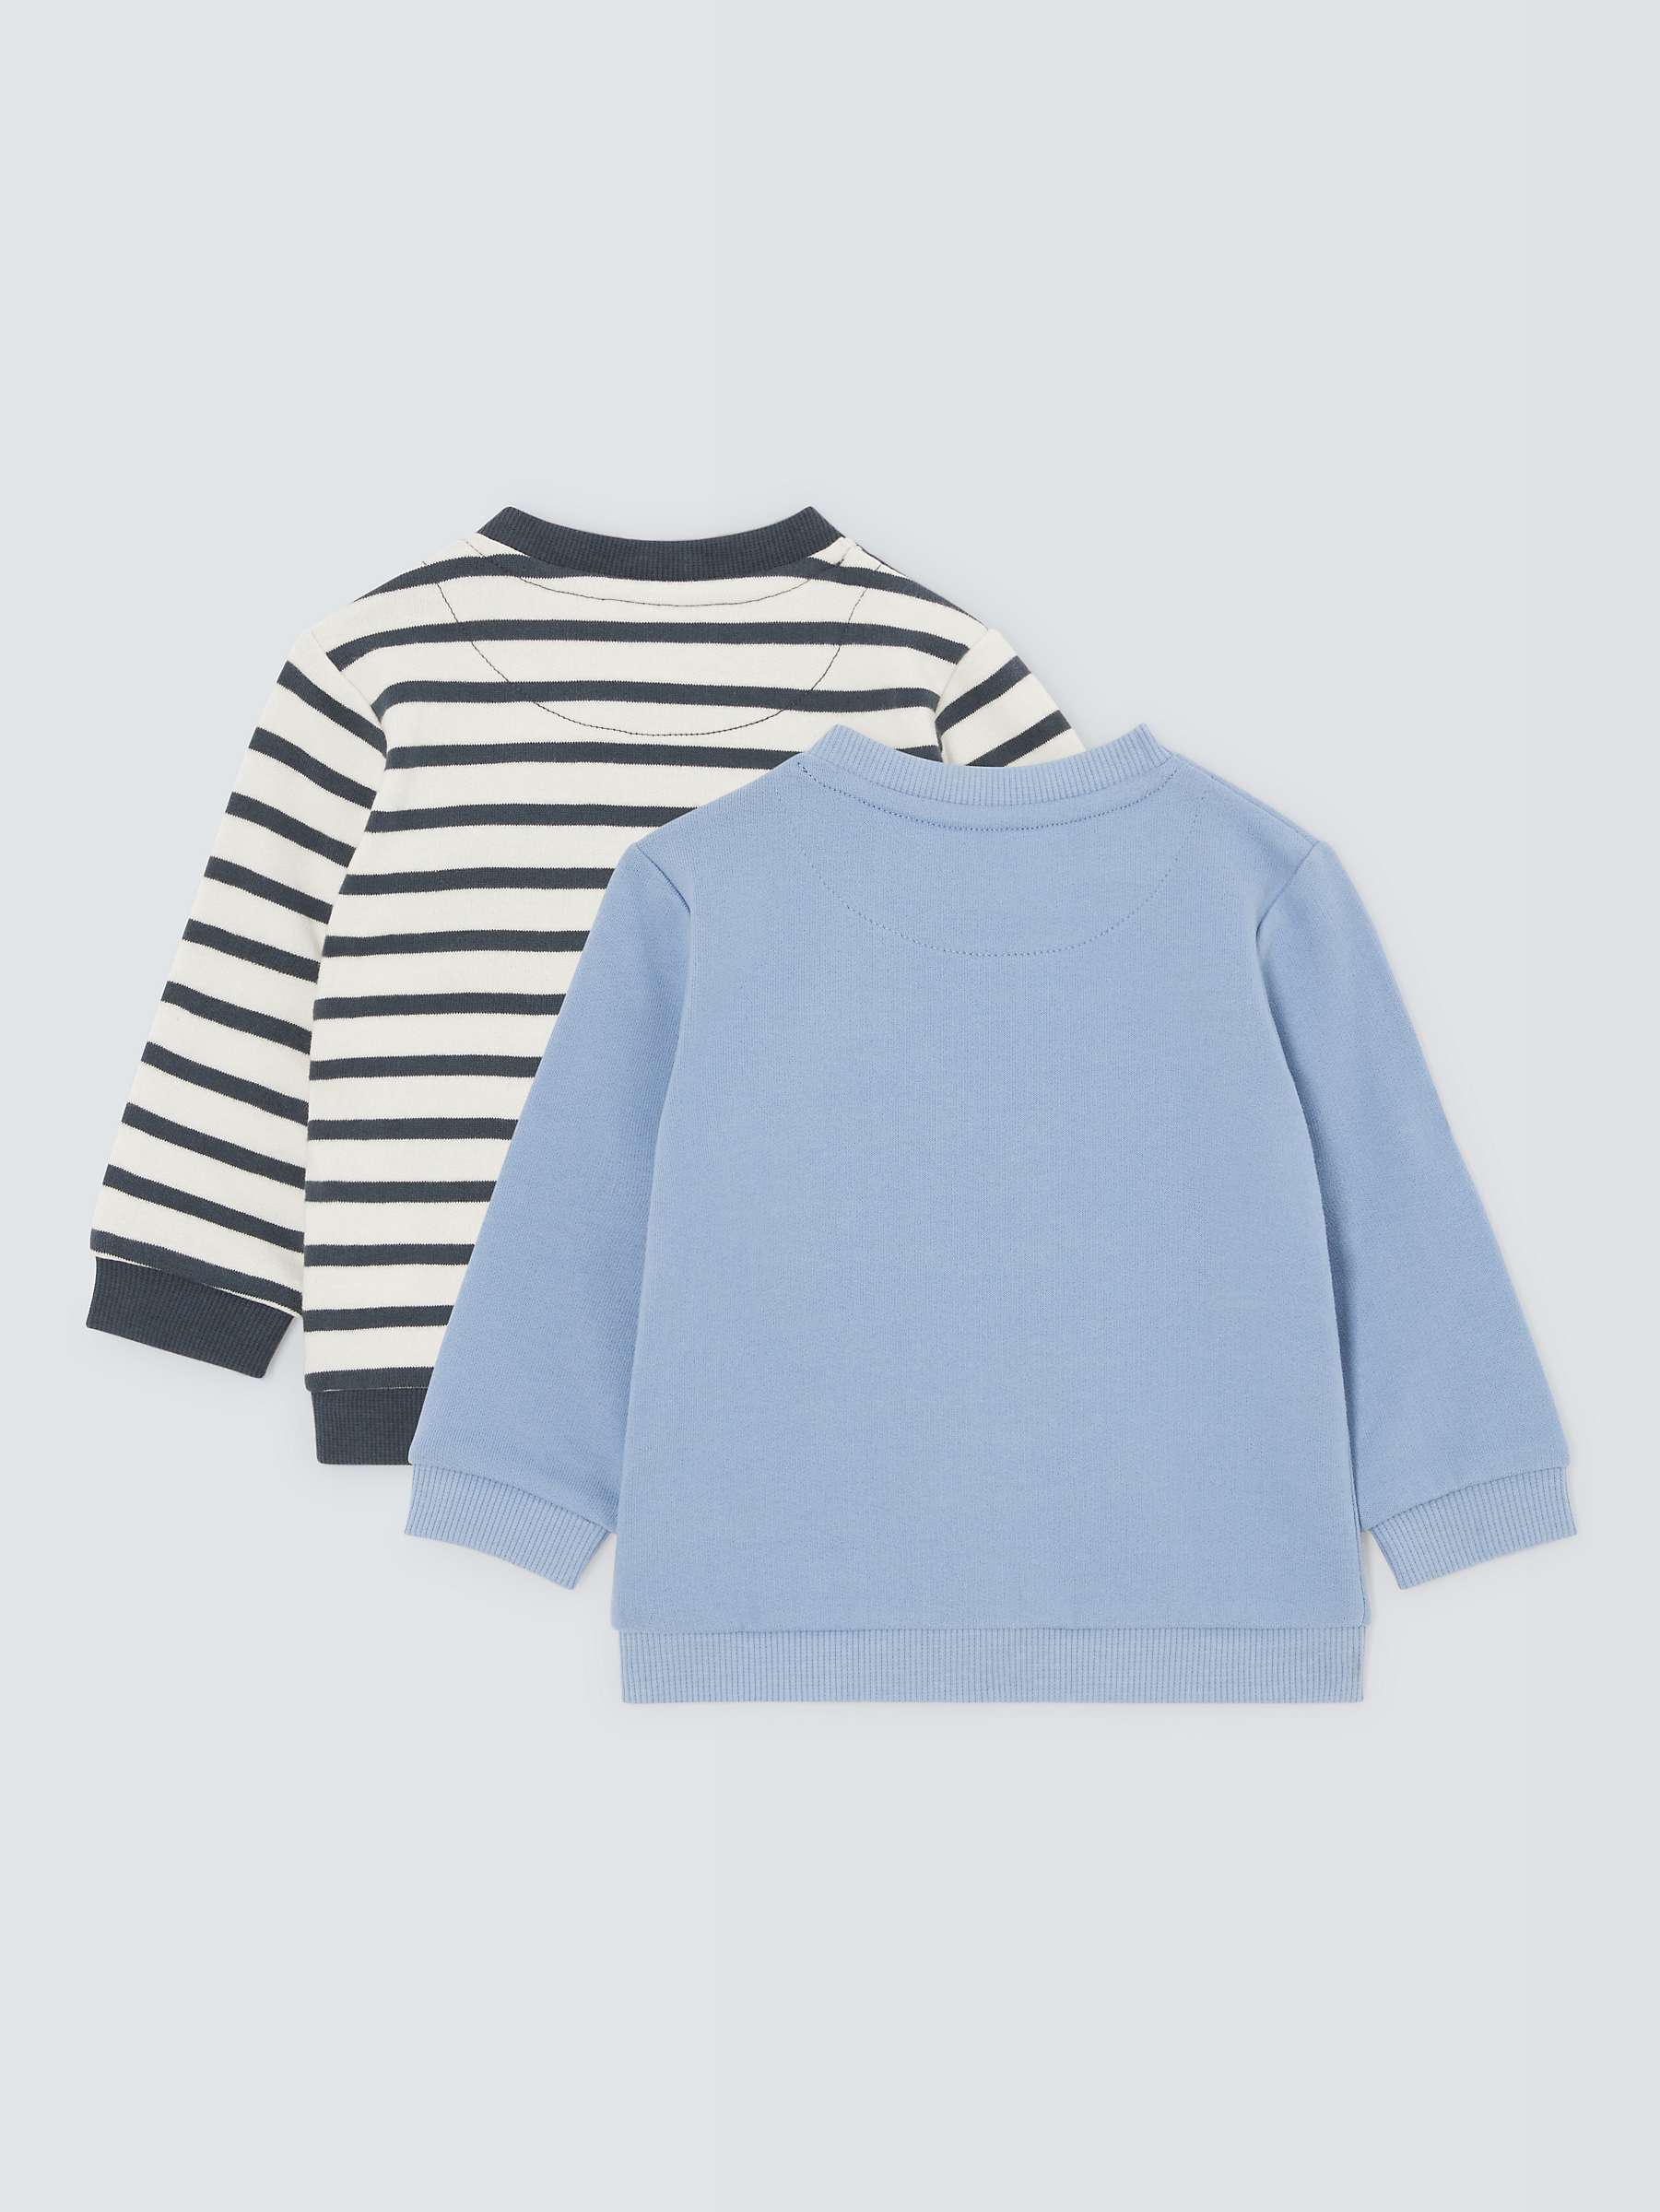 Buy John Lewis Baby Plain & Stripe Sweatshirt, Pack of 2, Blue/Multi Online at johnlewis.com